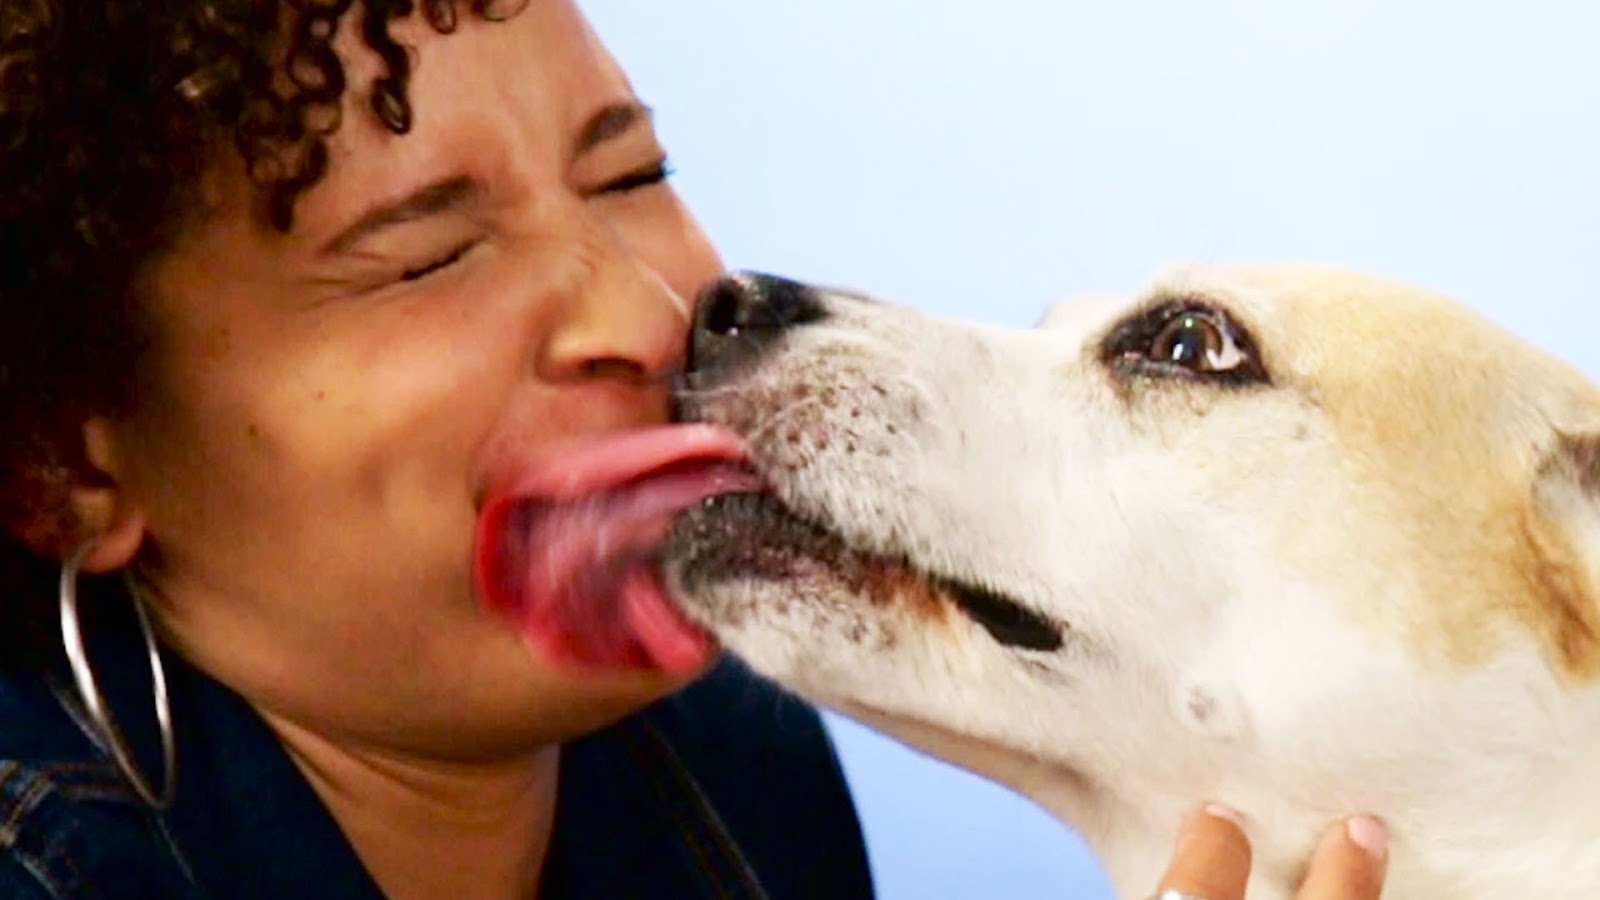 Lick movies. Порода собак для куни. Gross Dog Kisses. Девушка зажимает рот собаке. Dog licking Lips.